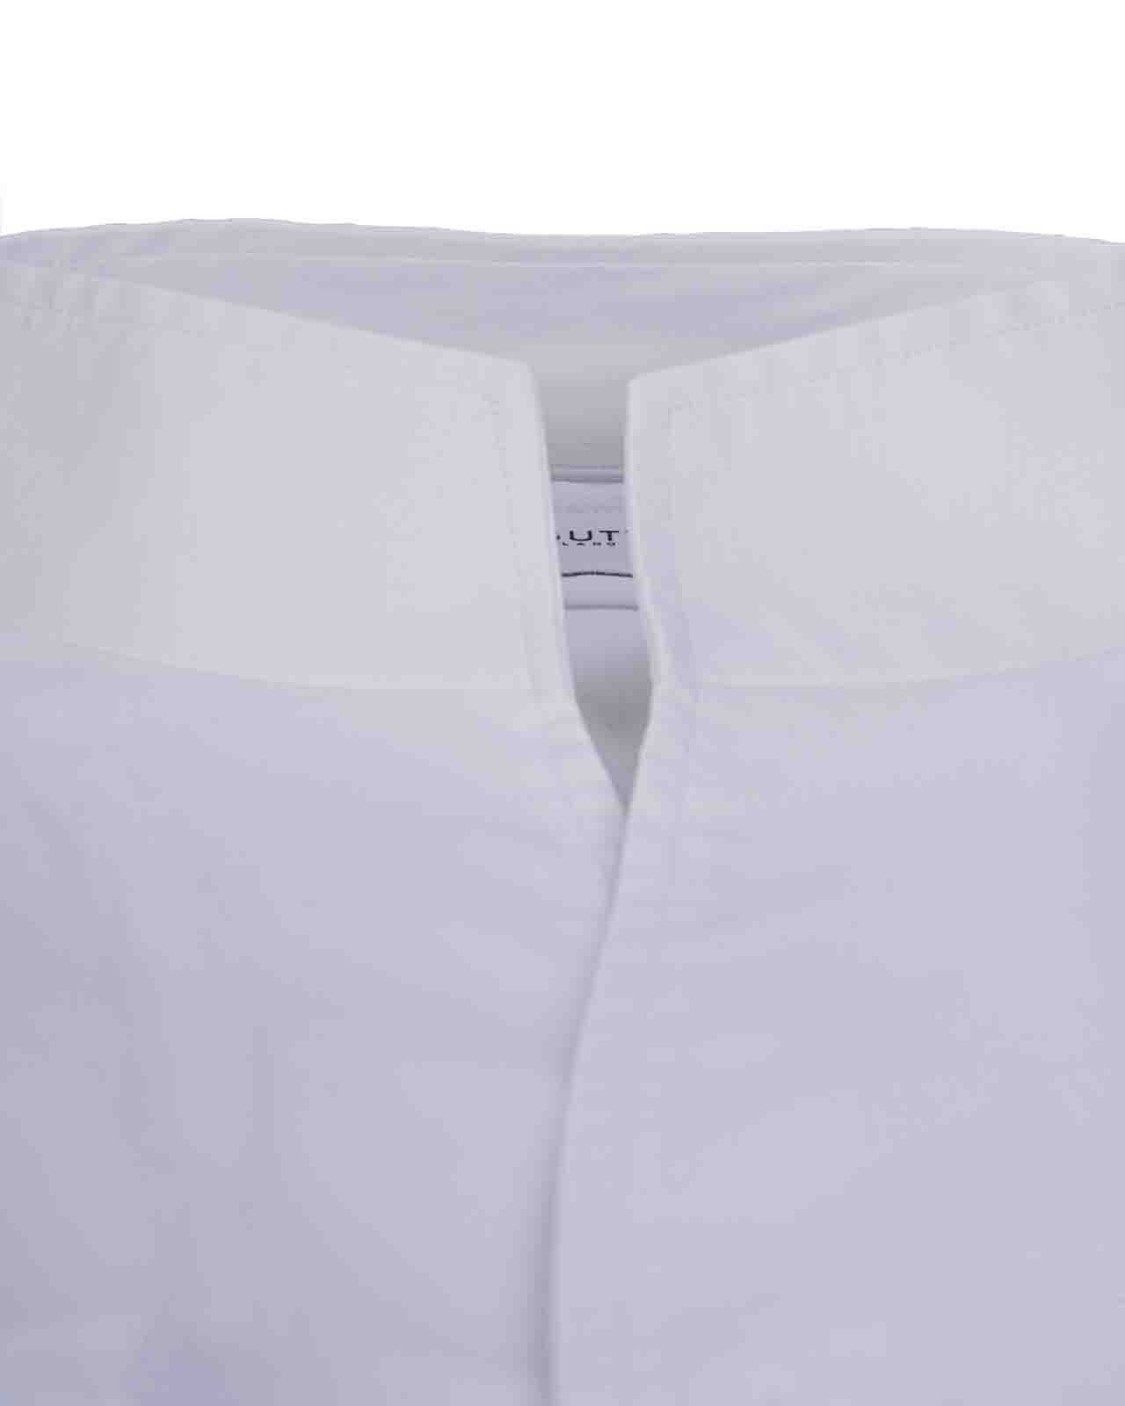 shop BAGUTTA  Camicia: Bagutta camicia "Nbruxelles"
Slim fit.
Composizione: 72% cotone, 25% poliamide, 3% elastan.
Made in Italy.. NBRUXELLES CN9672-001 number 4890661